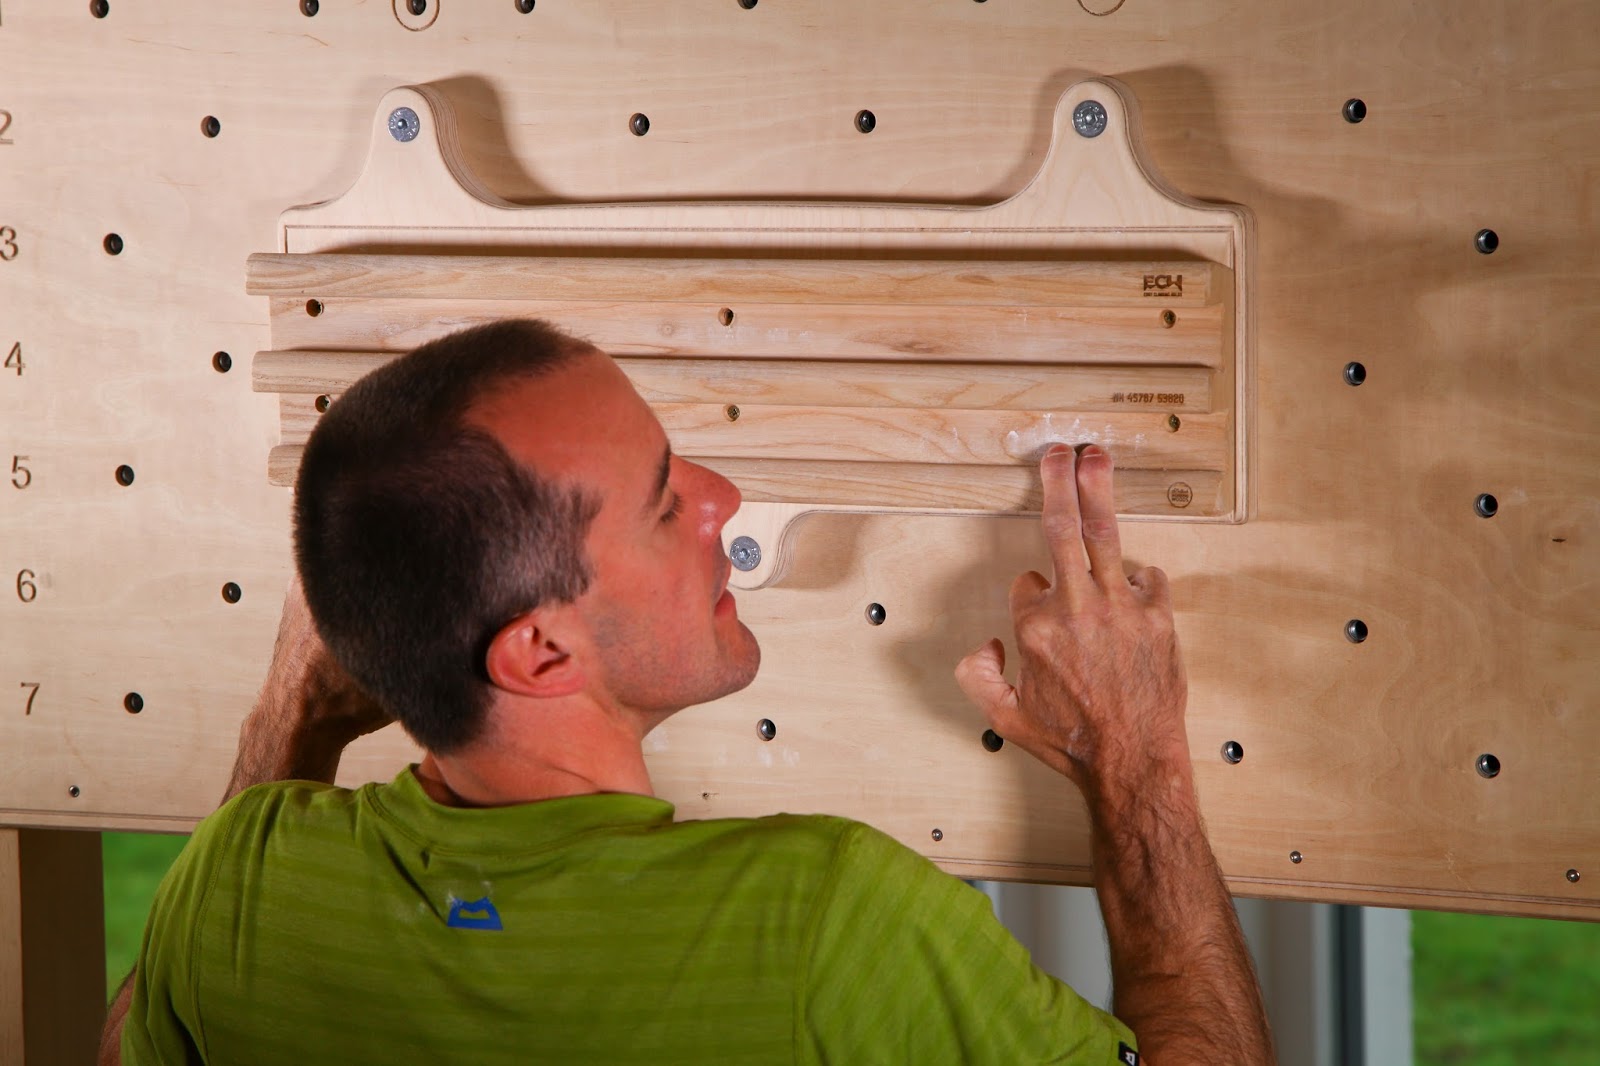 Climbing hangboard//fingerboard